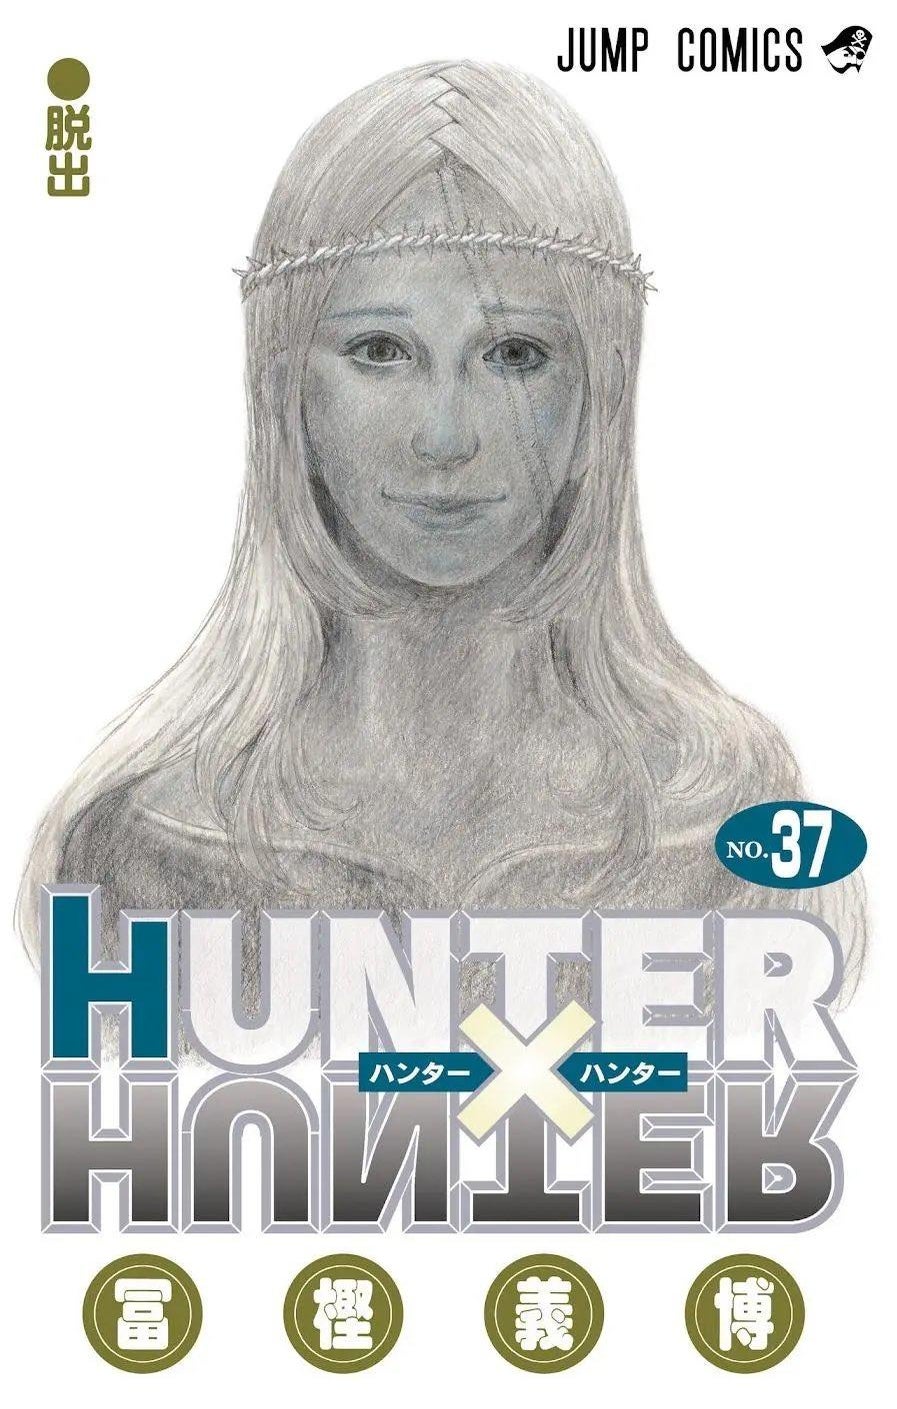 Hunter❌Hunter on X: Hunter x Hunter Vol. 37 is dropping soon